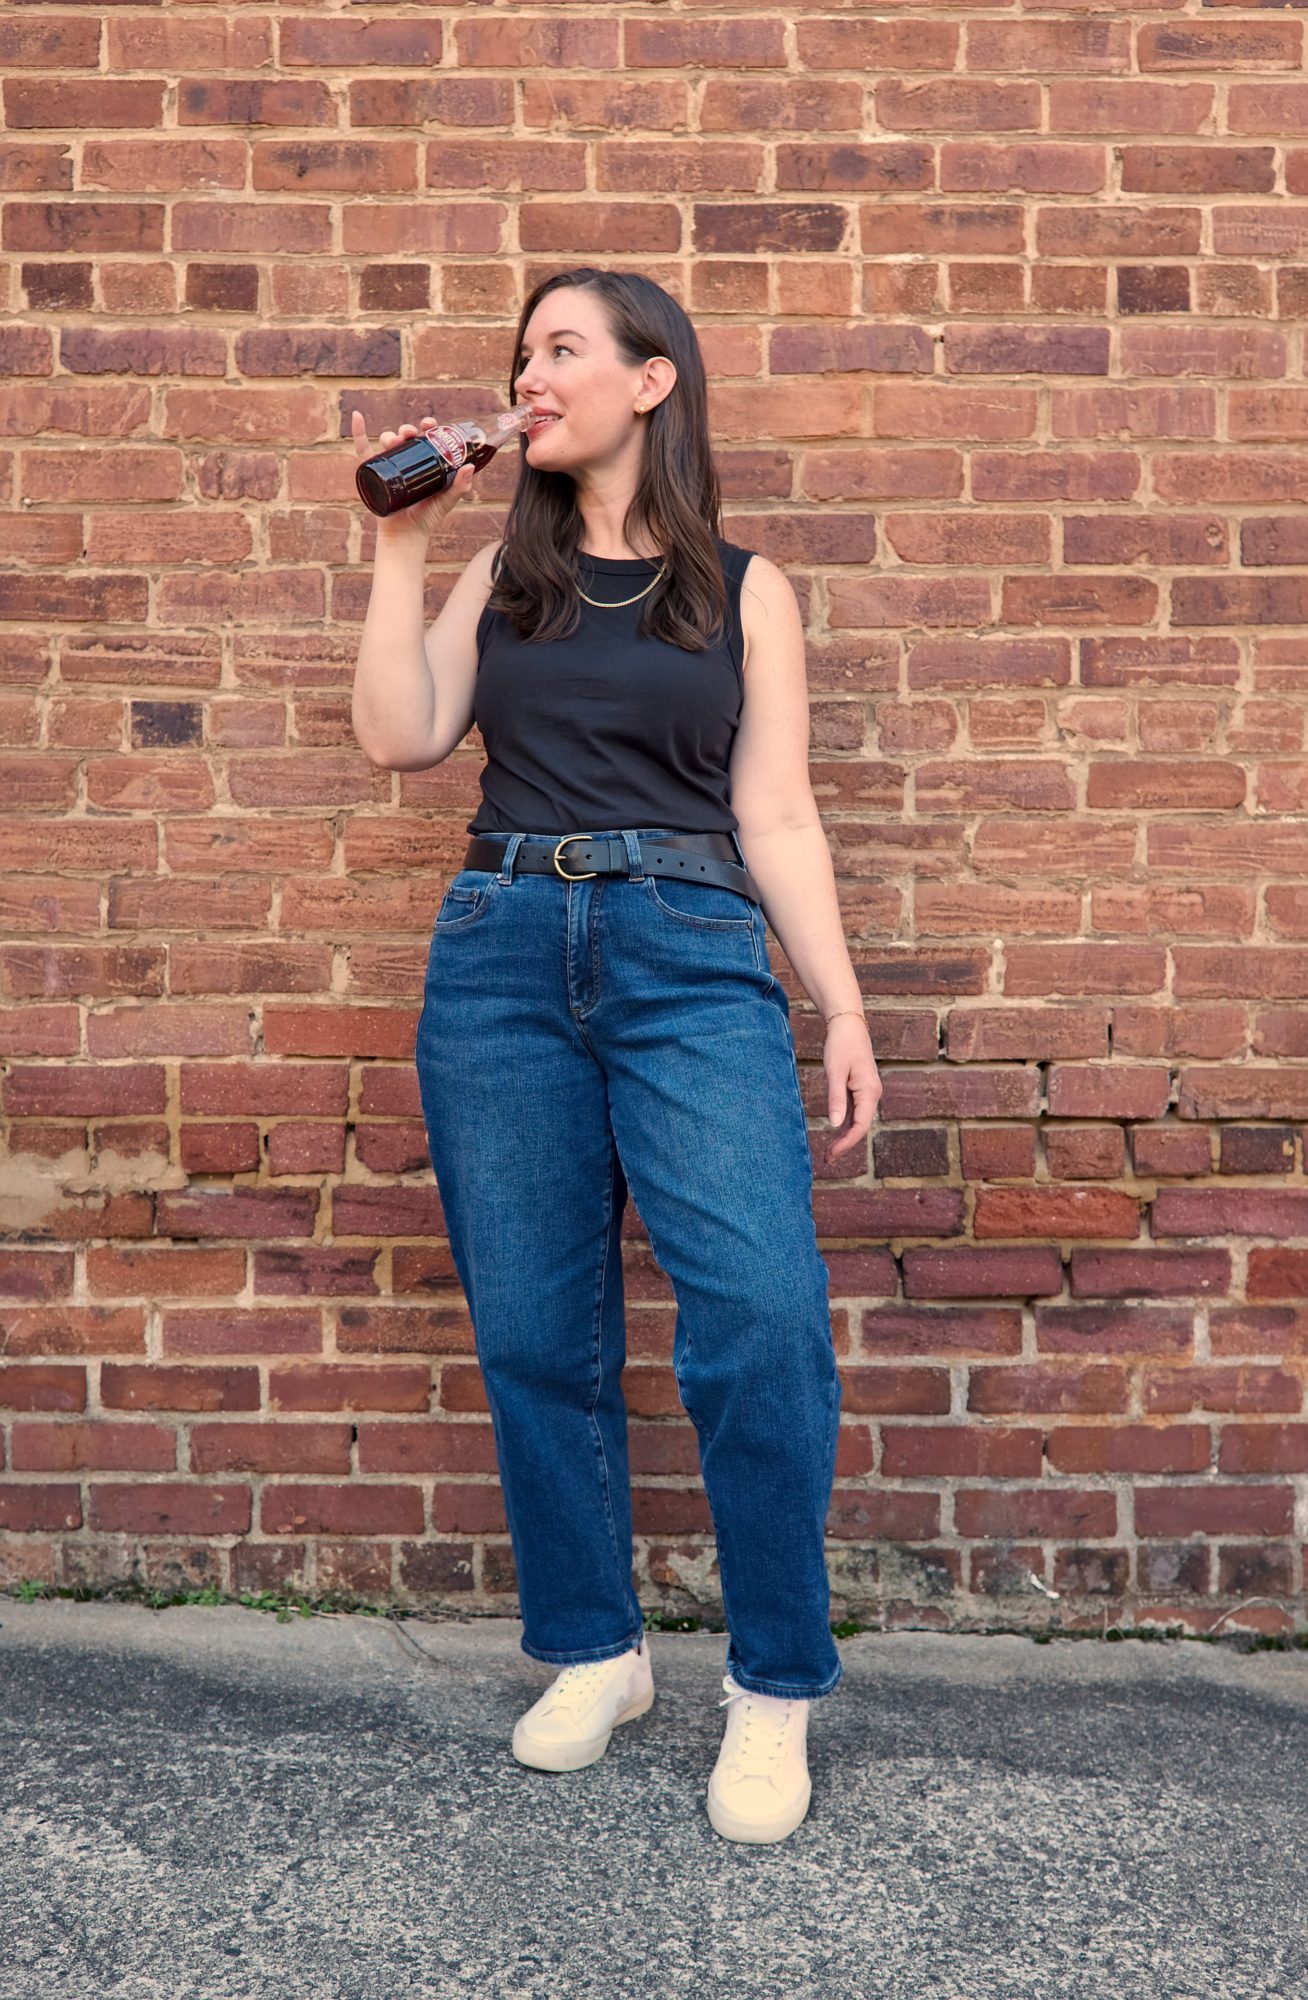 Alyssa drinks a bottle of Cheerwine in Salisbury, NC